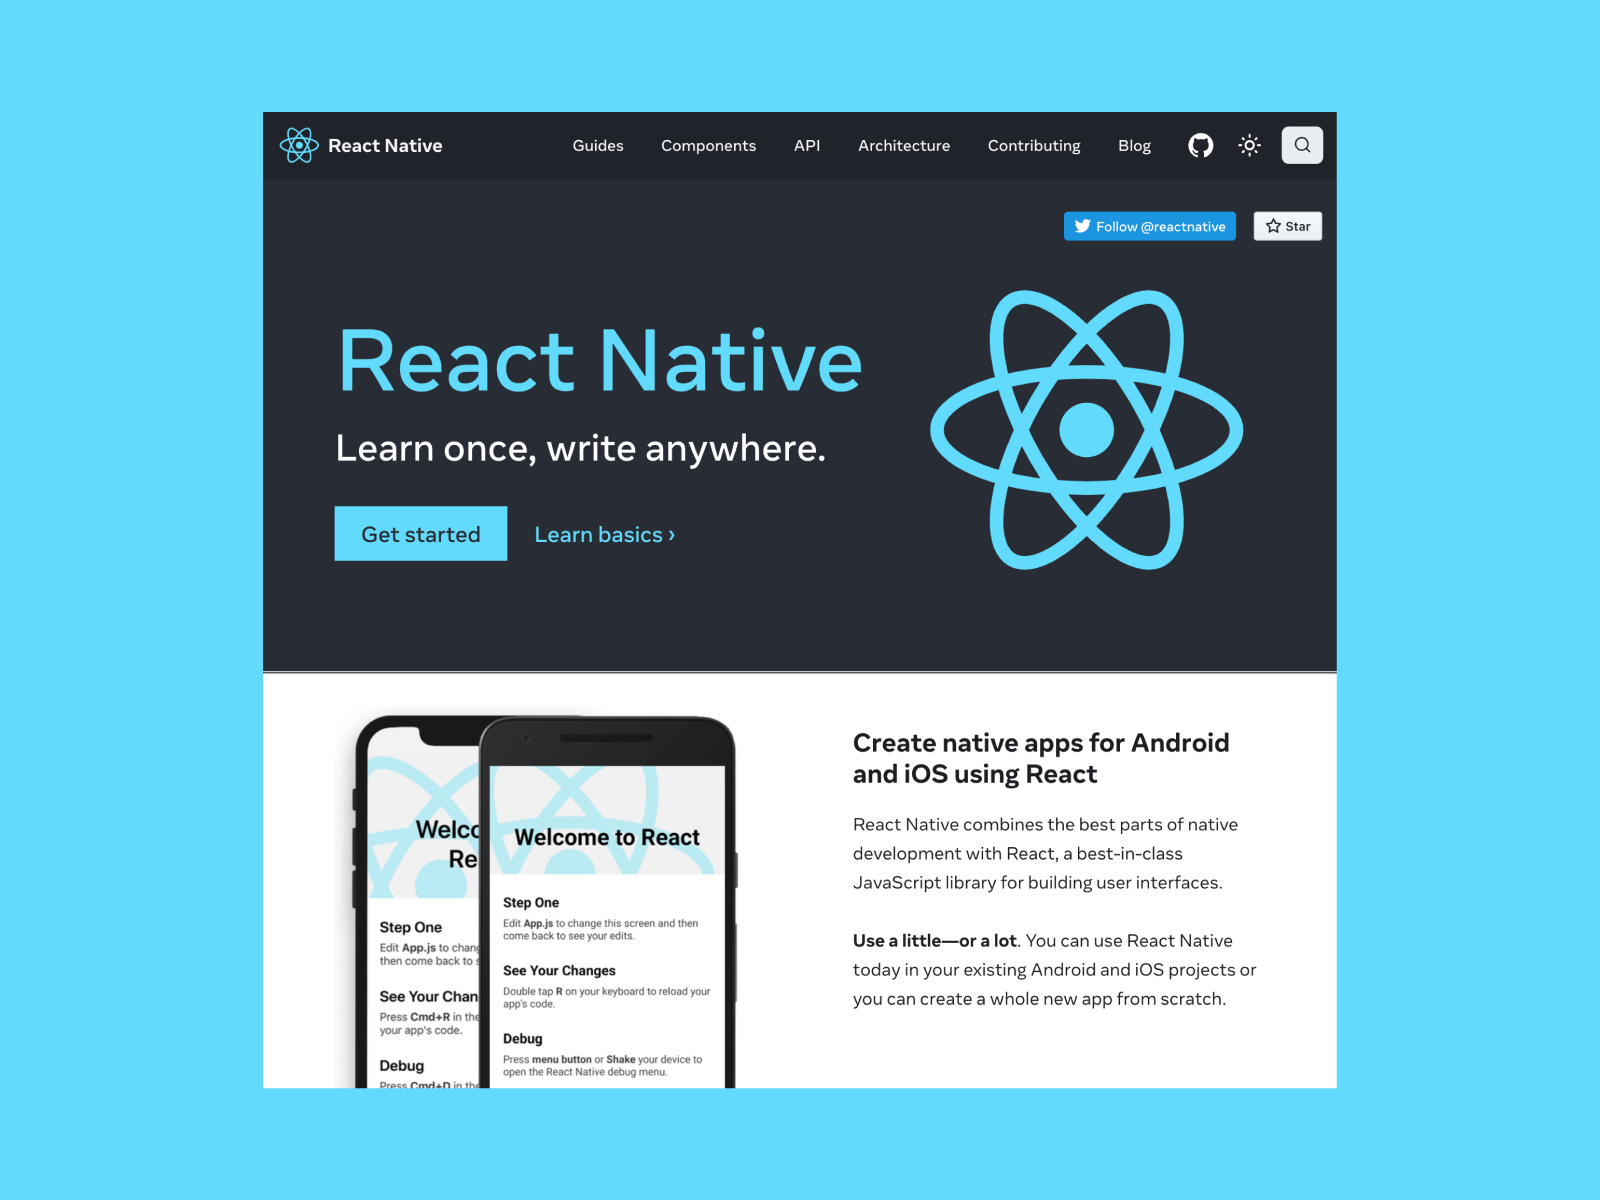 React Native is an app development framework created by Meta